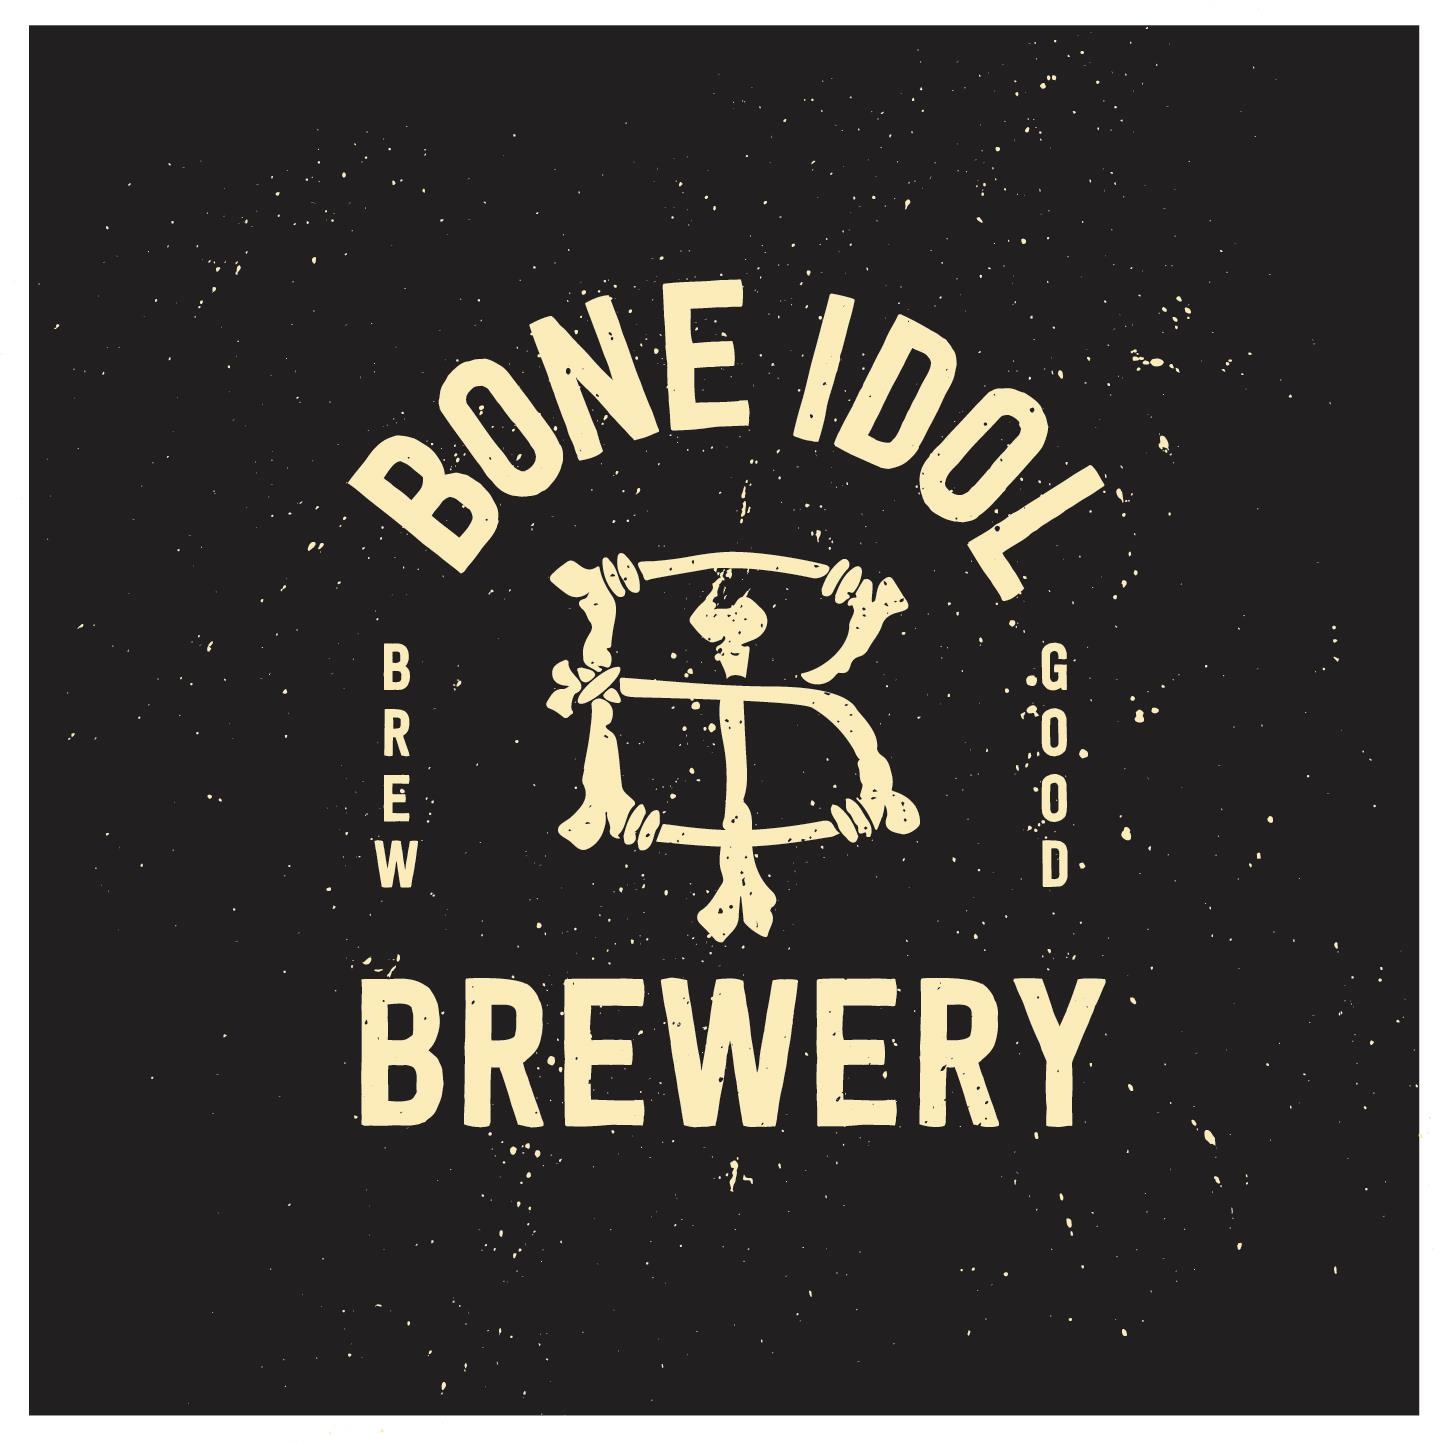 Bone Idol Brewery